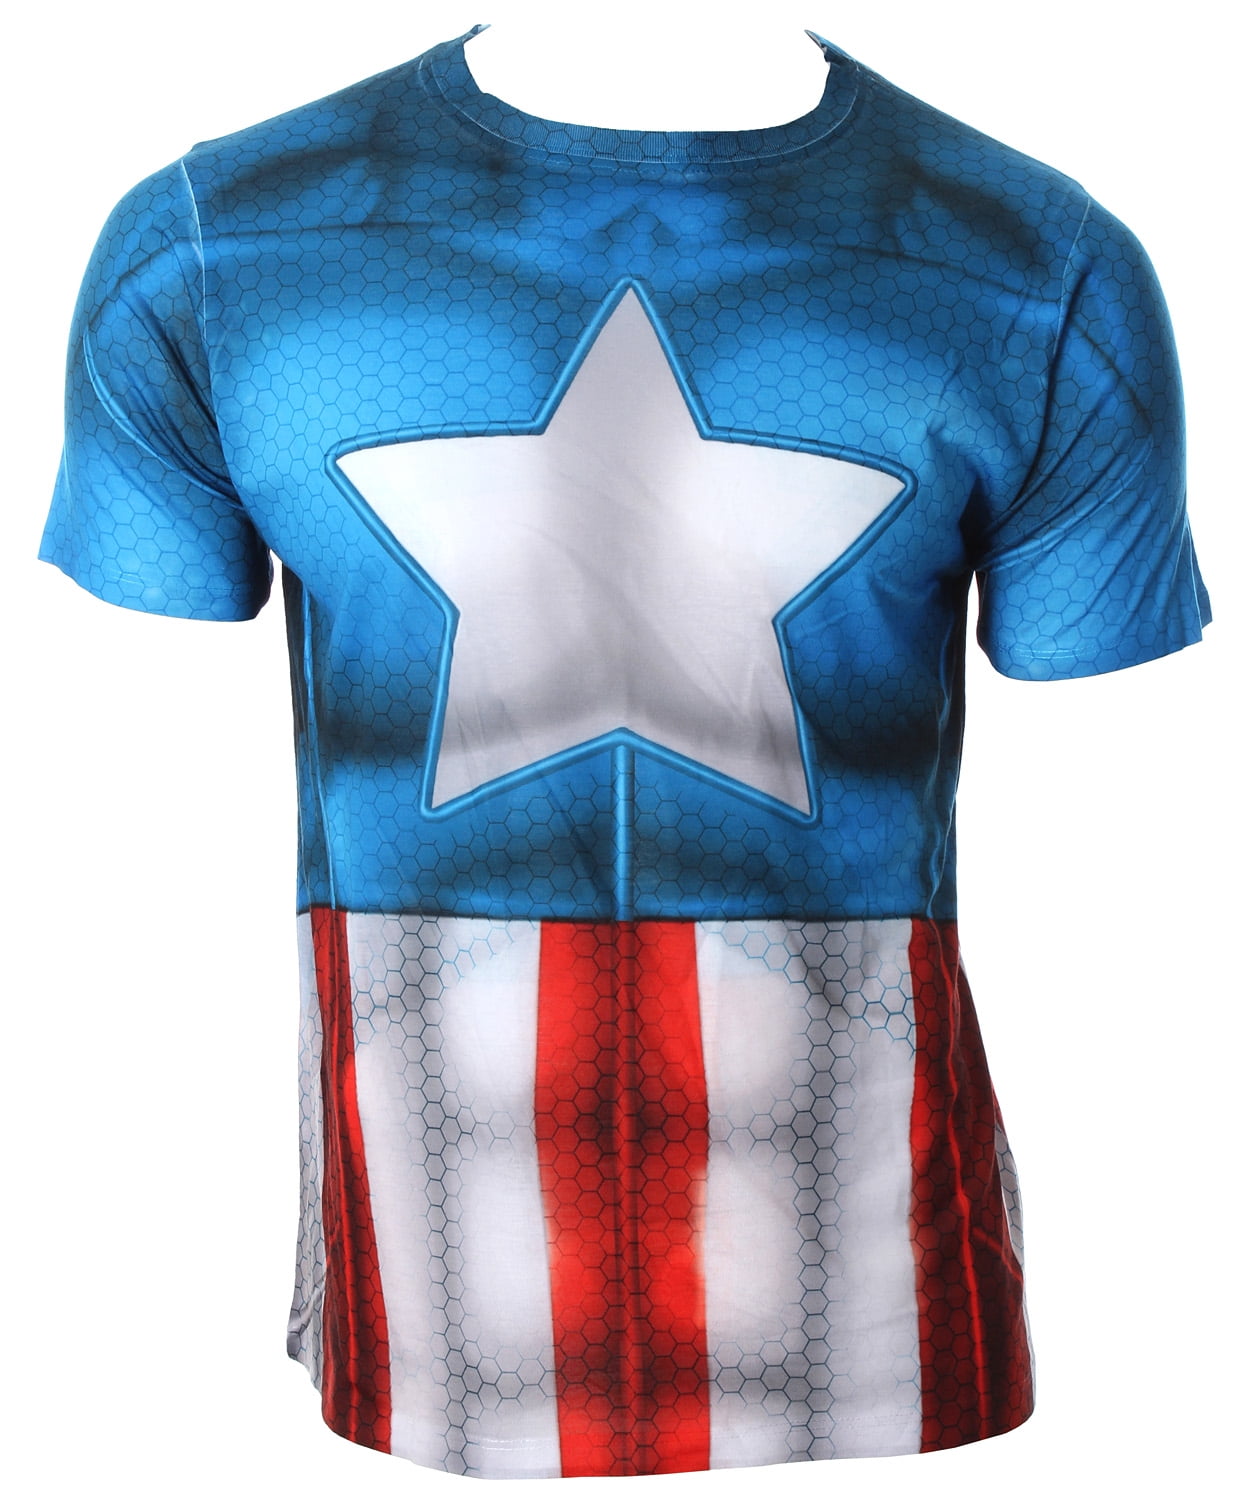 Marvel Men's Captain America Shield Blue Muscle Tee Licensed Shirt New Polyester